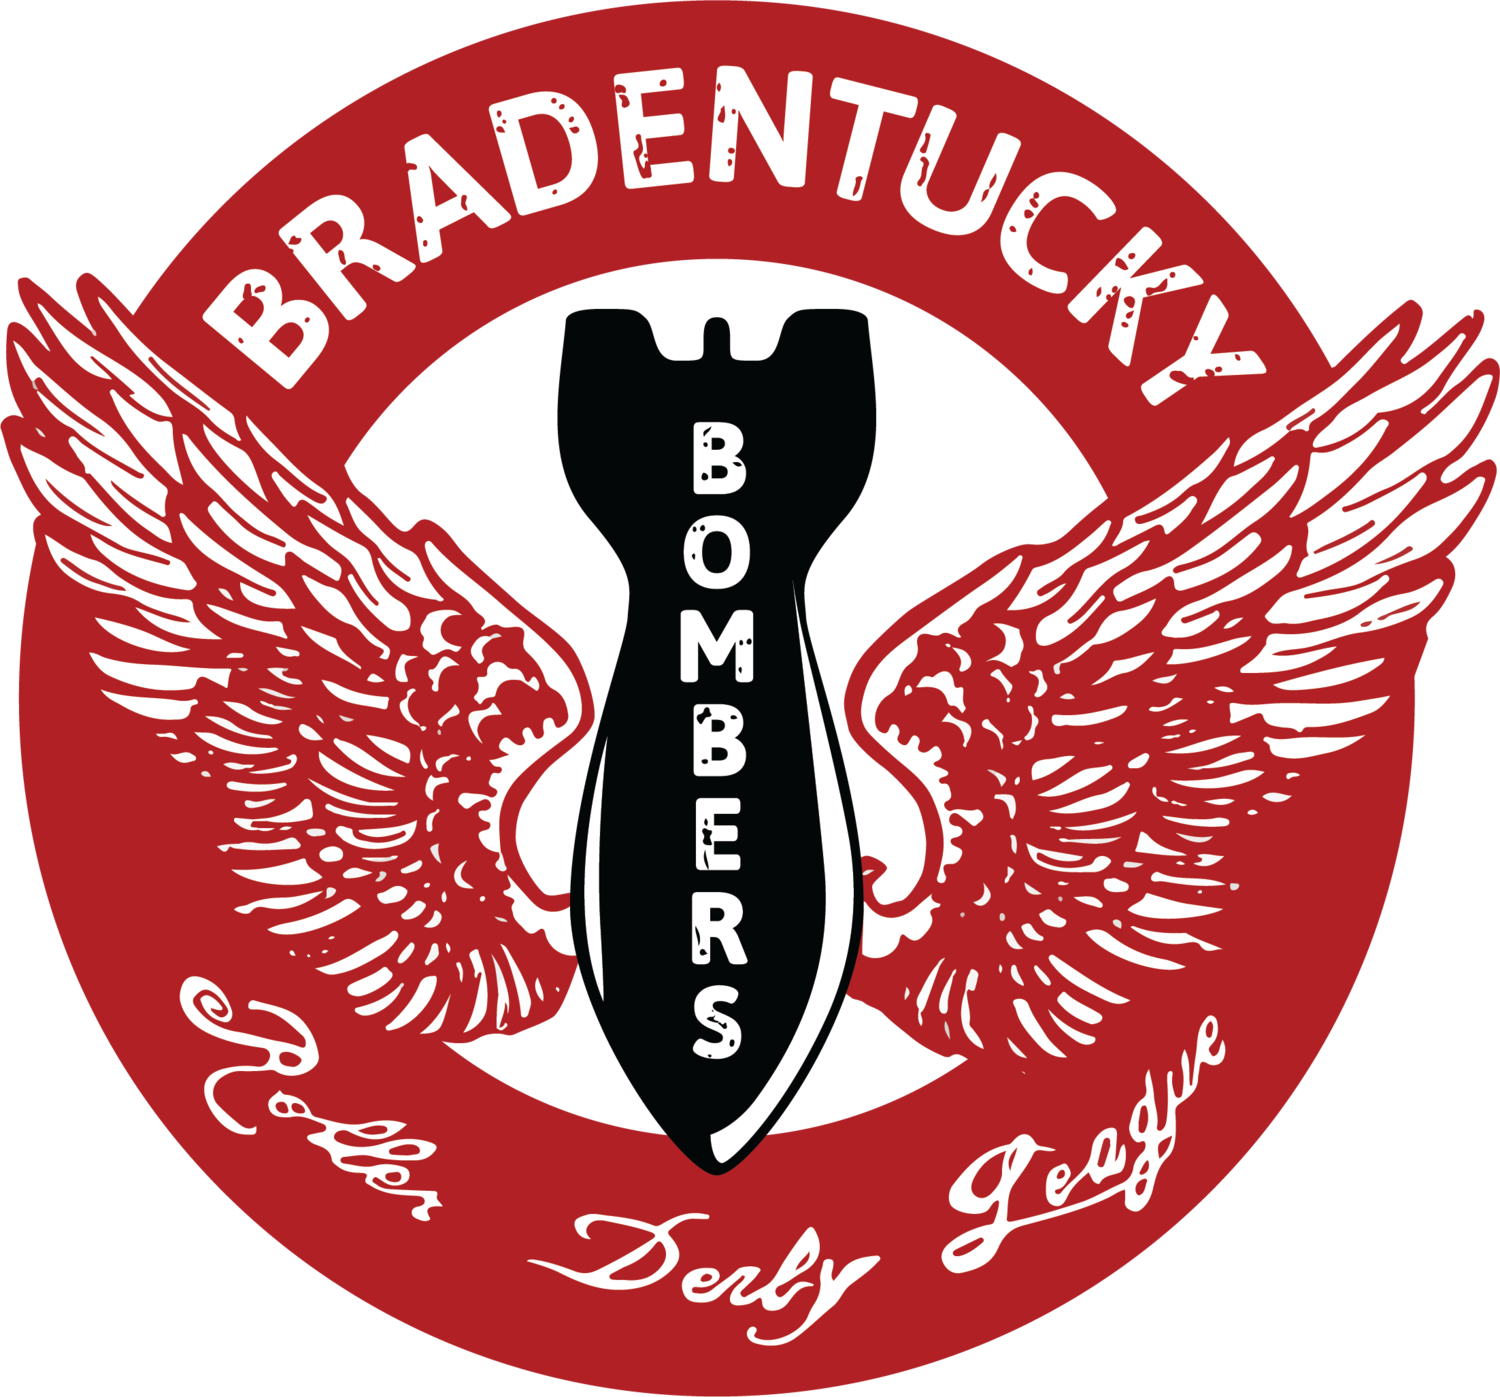 Bradentucky Bombers Roller Derby